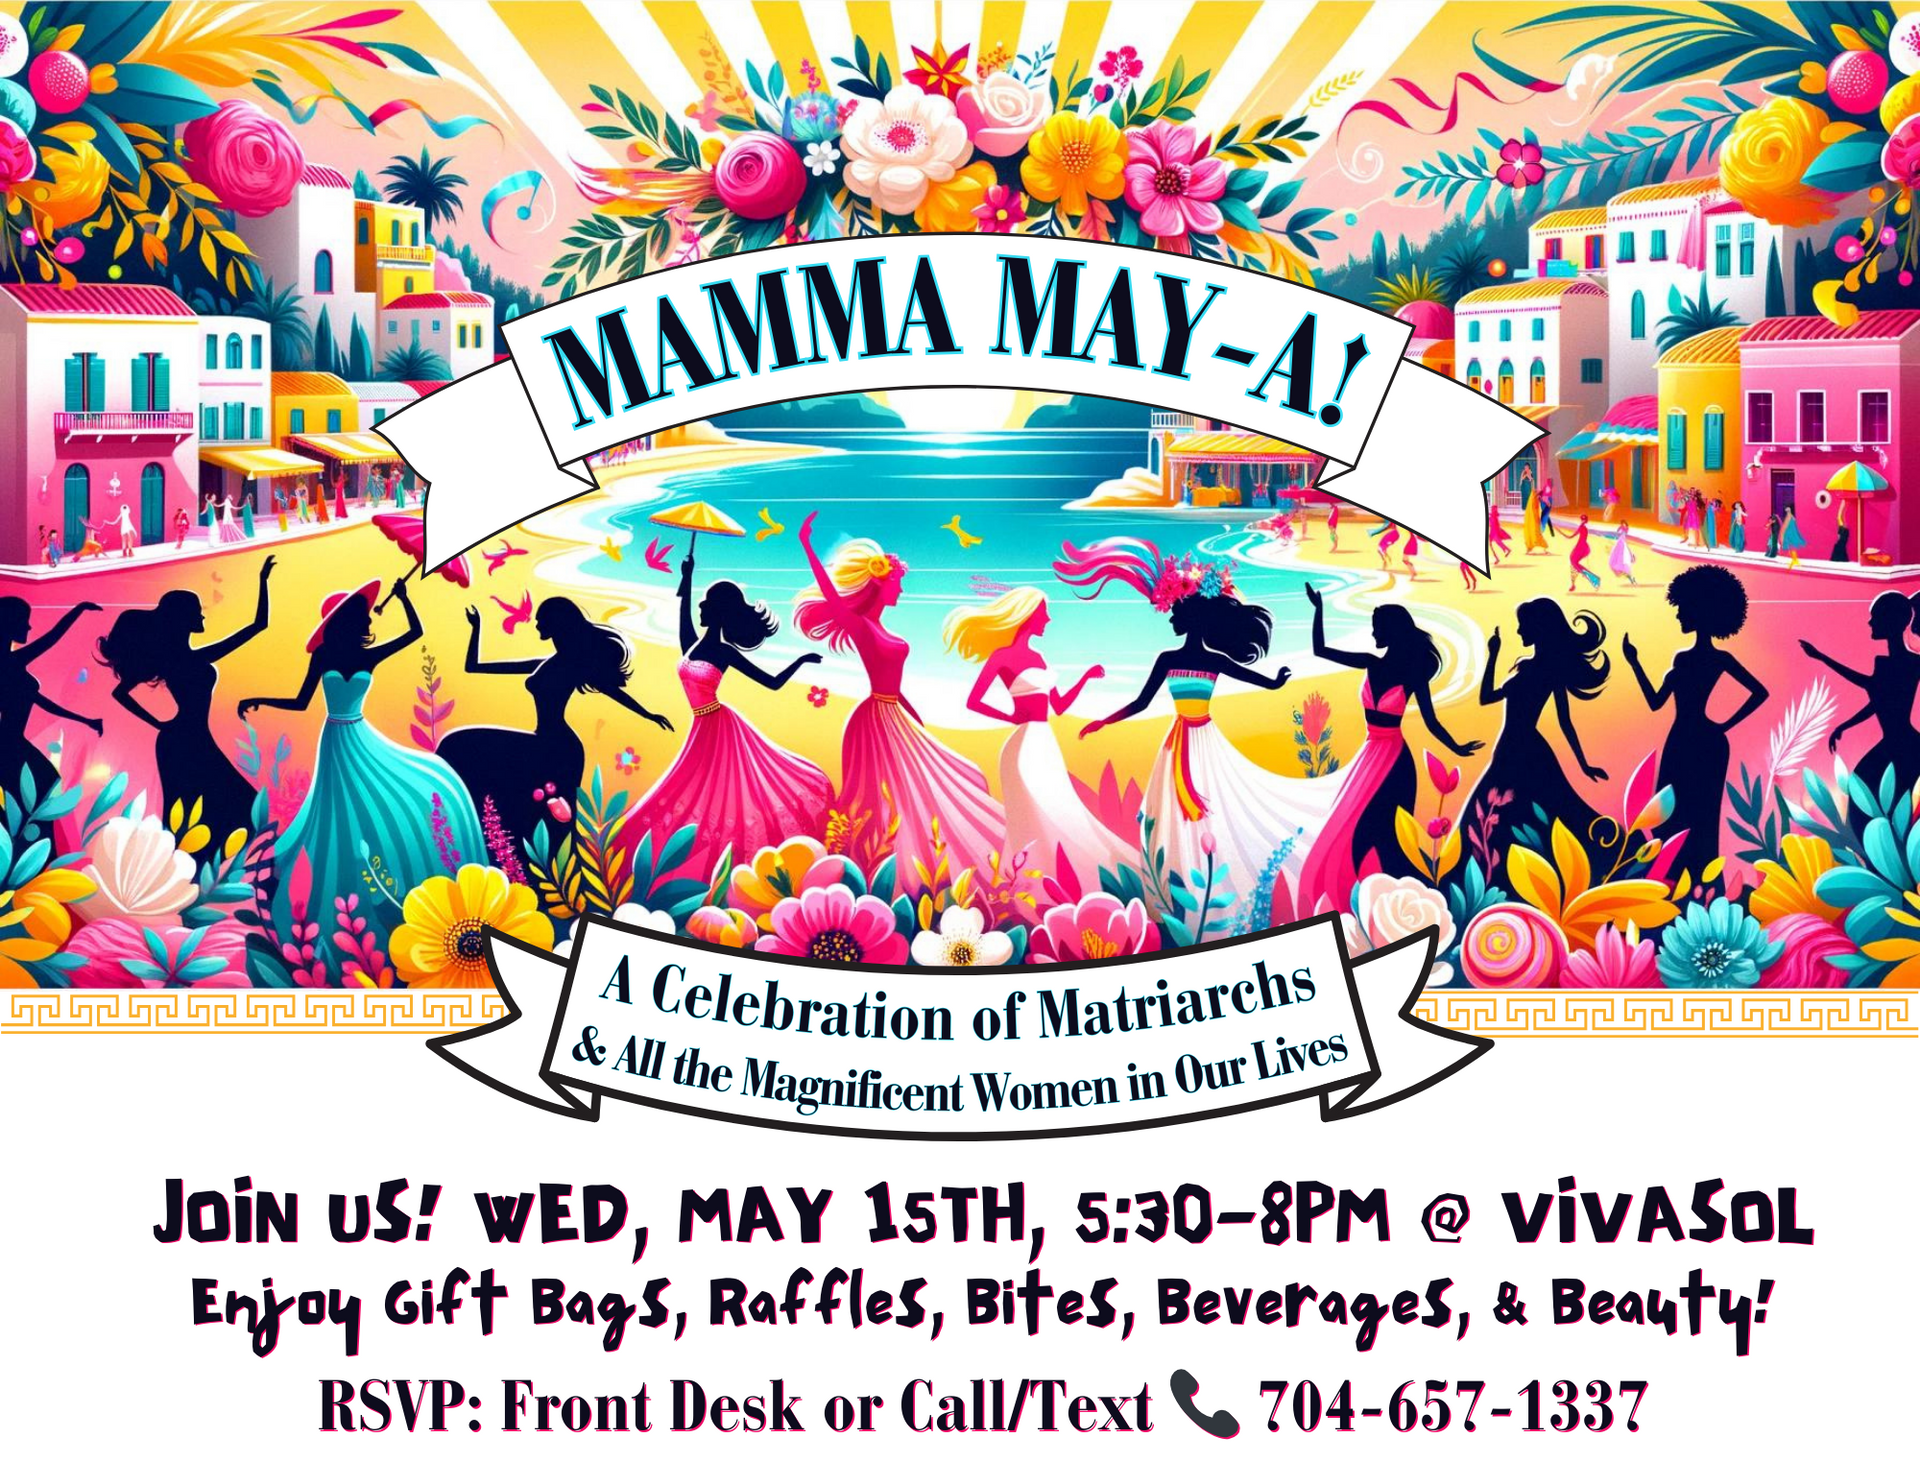 Mamma May-1 Poster | Mooresville, NC | VivaSol